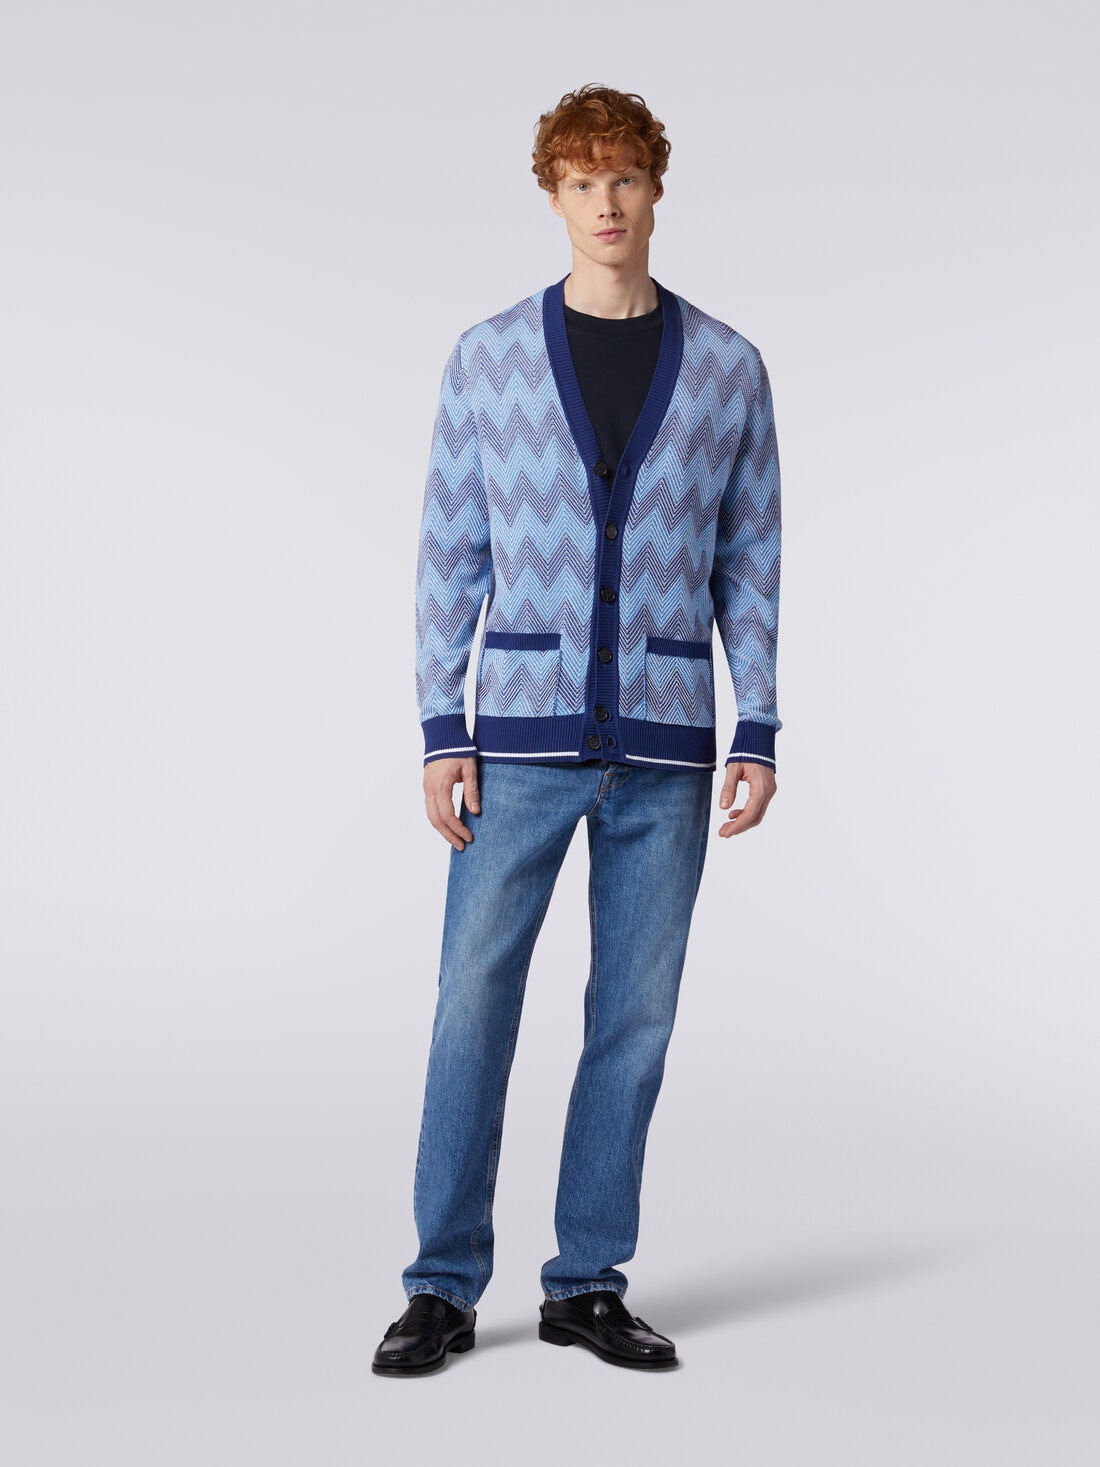 Cardigan in chevron cotton knit with contrasting trim, Blue - US24SM07BK034YS72F8 - 1